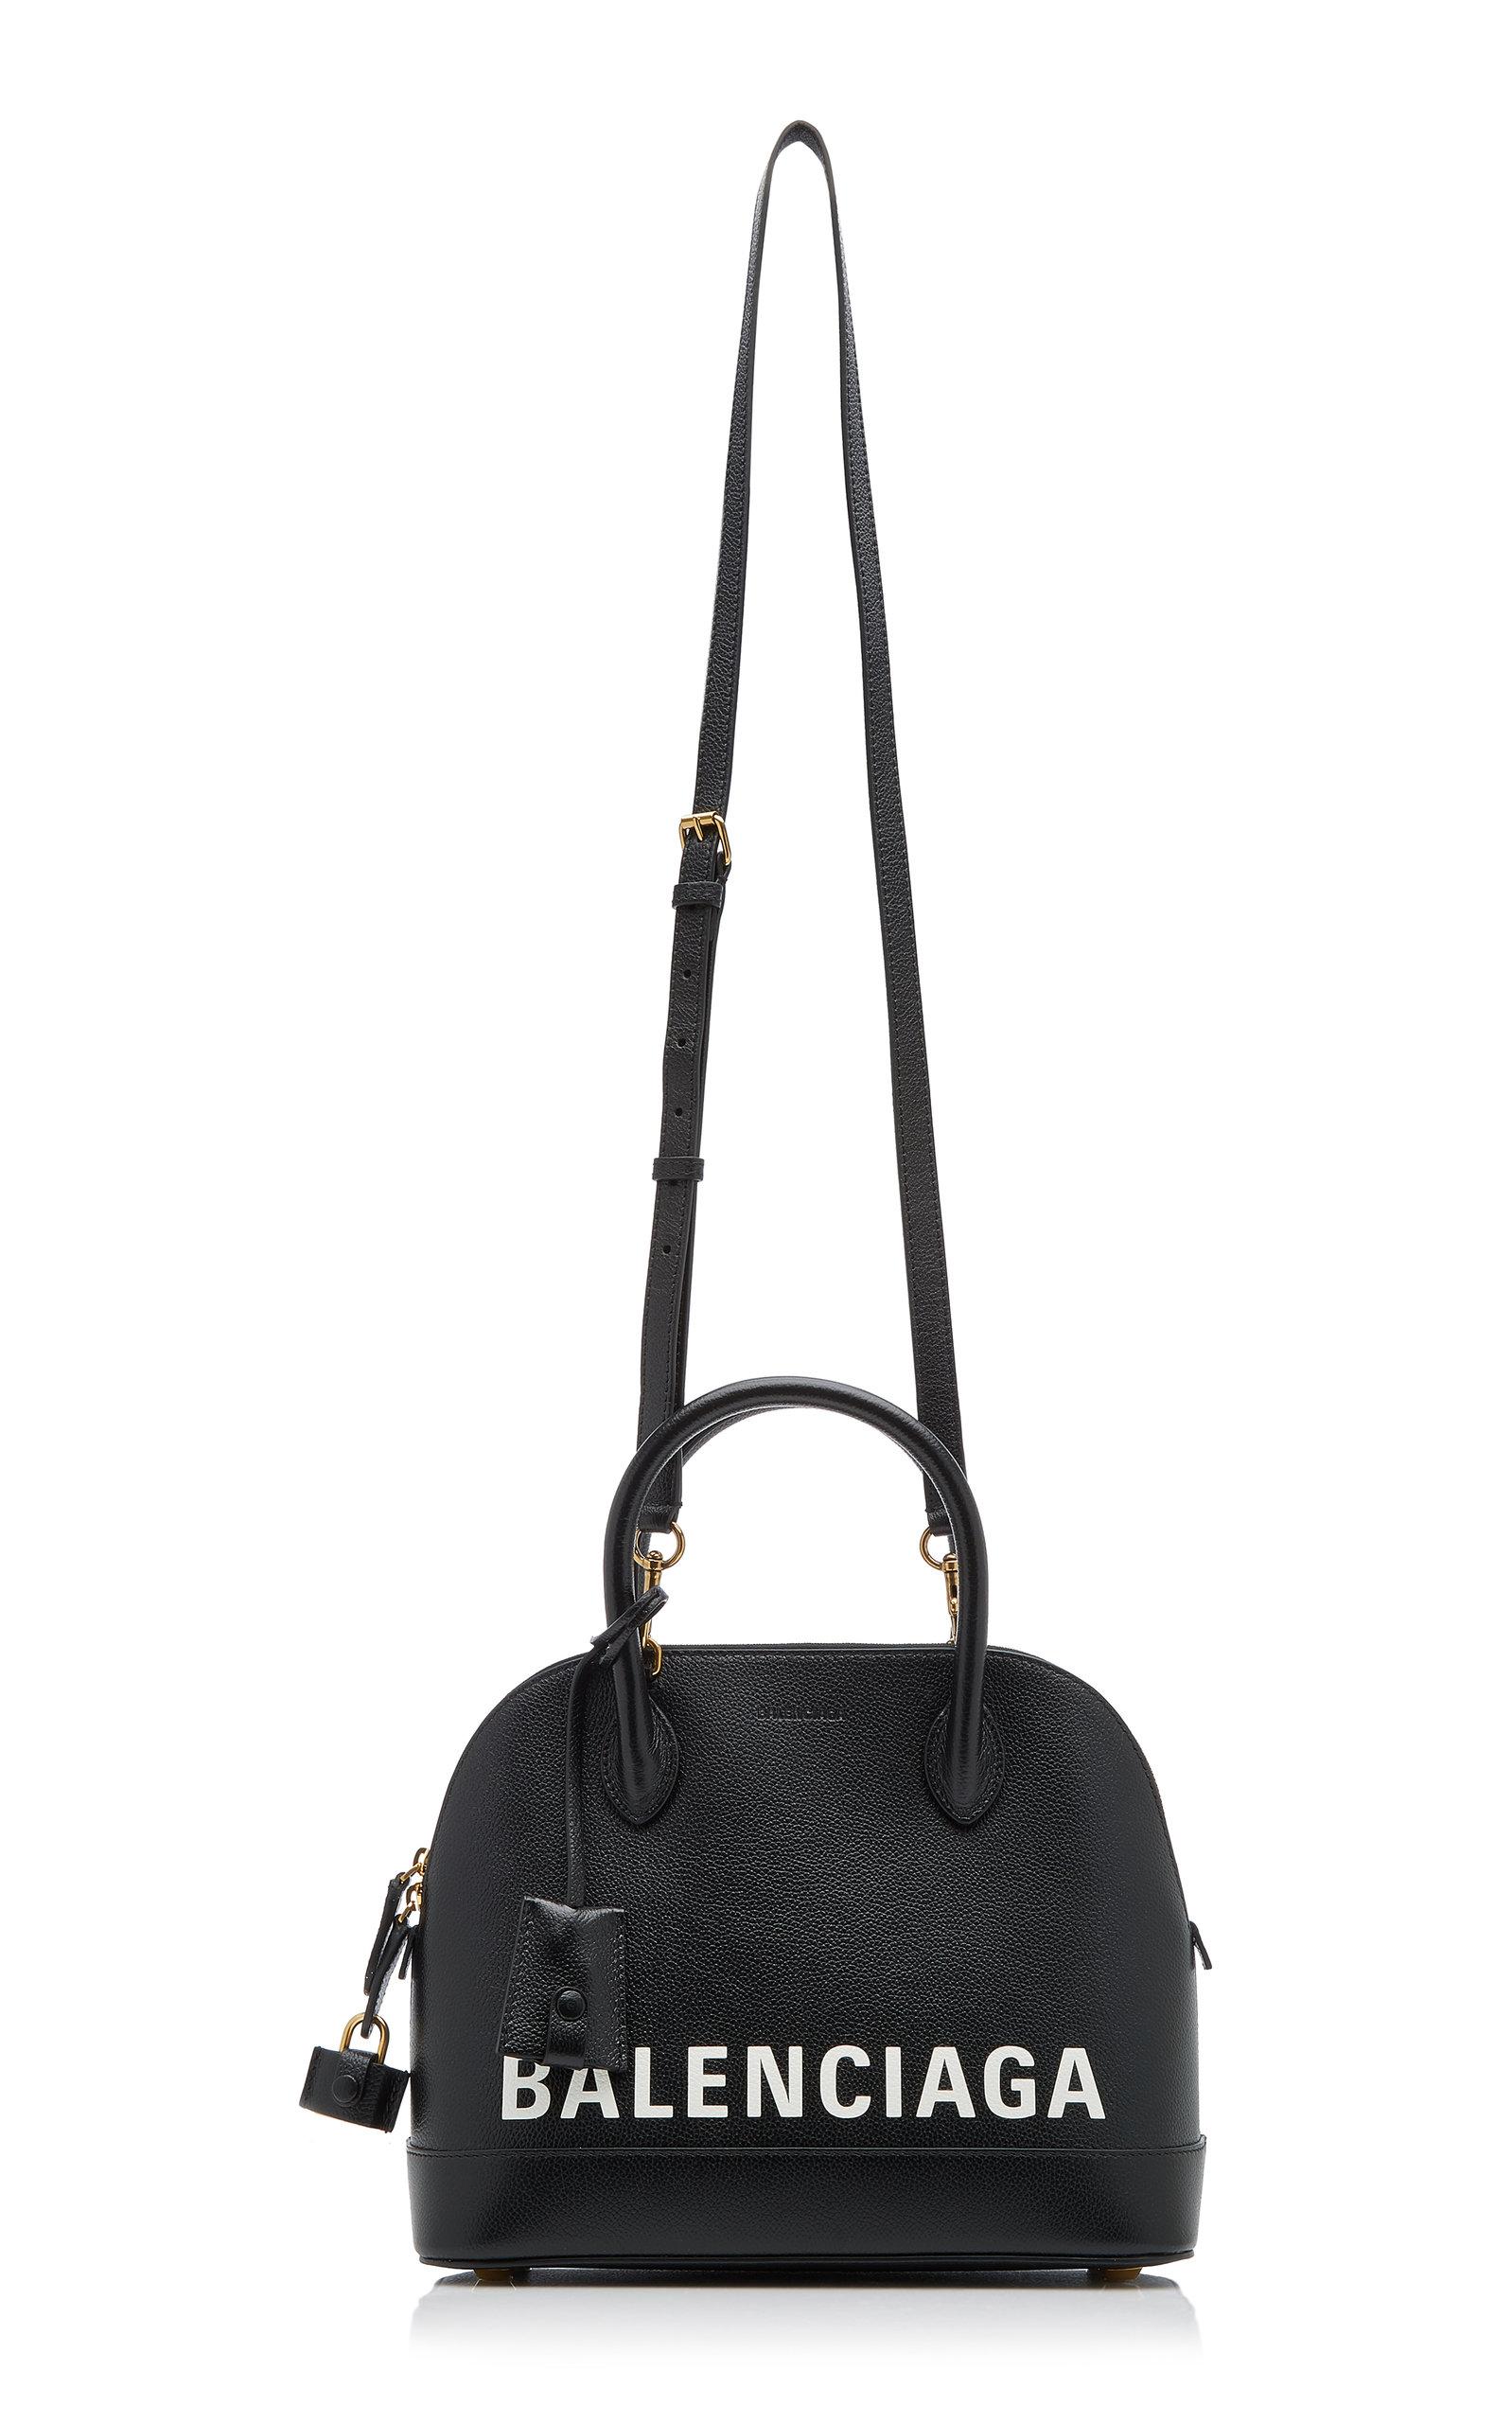 Balenciaga Ville Small Leather Handbag in Black / White (Black 